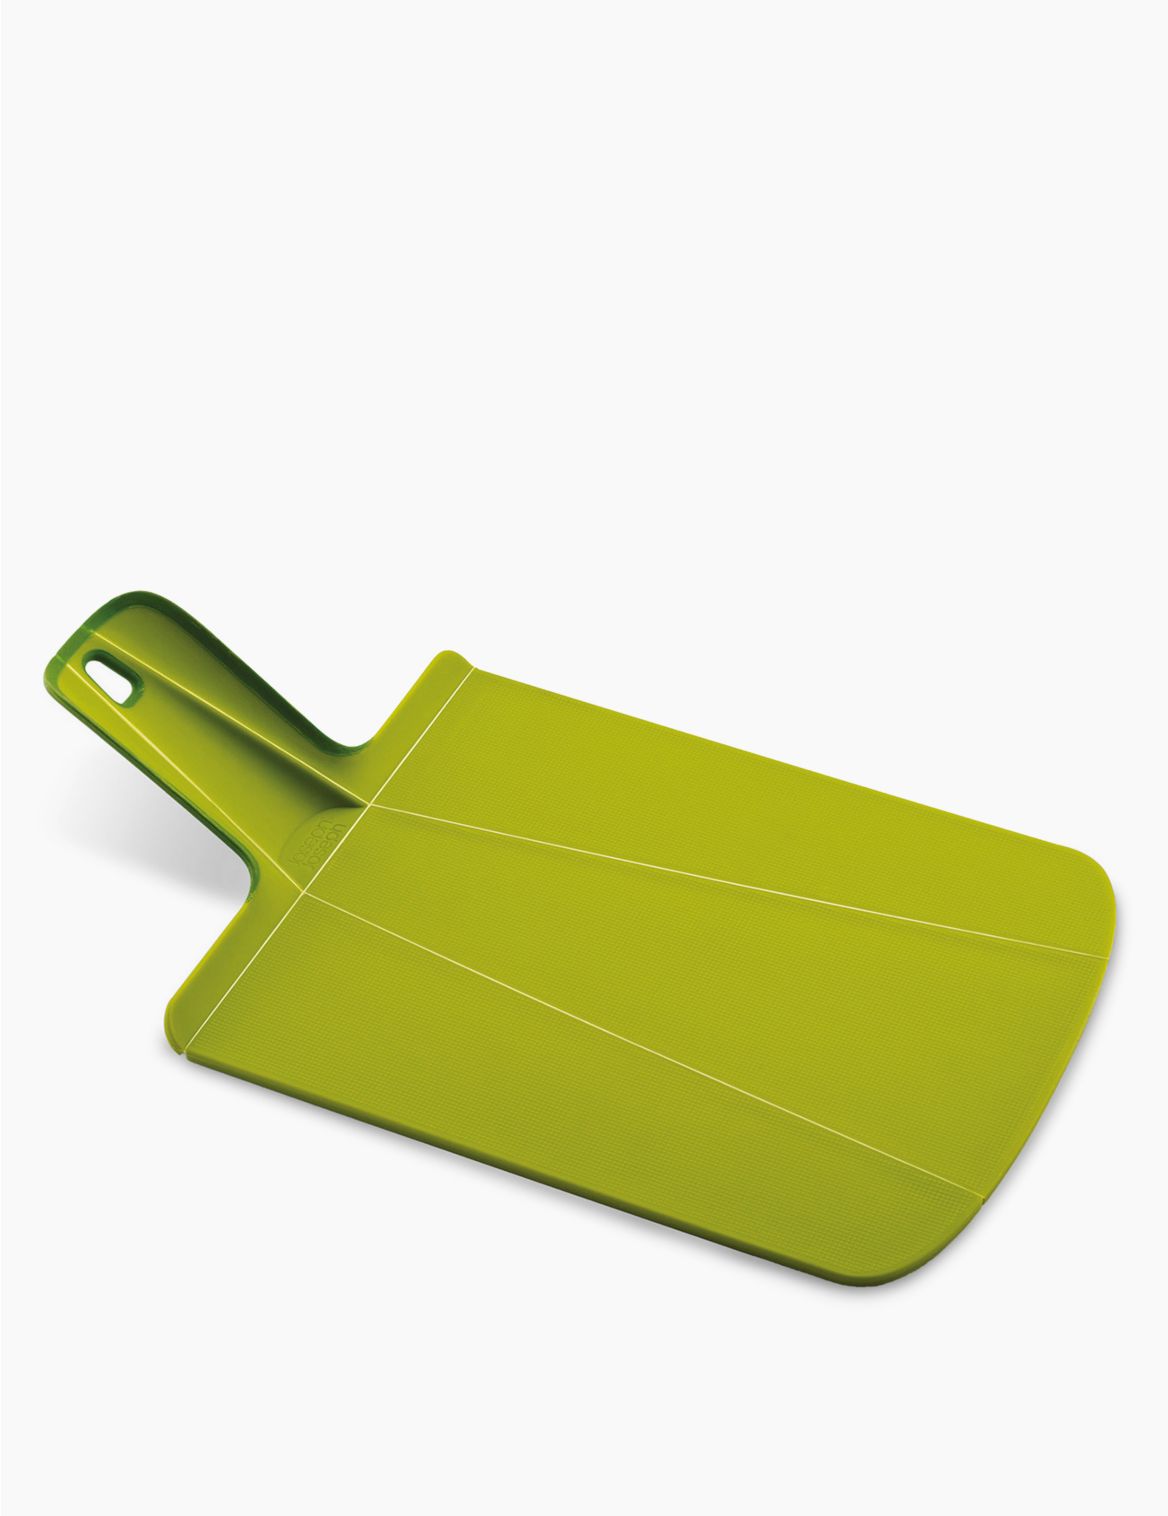 Small Green Chopping Board green